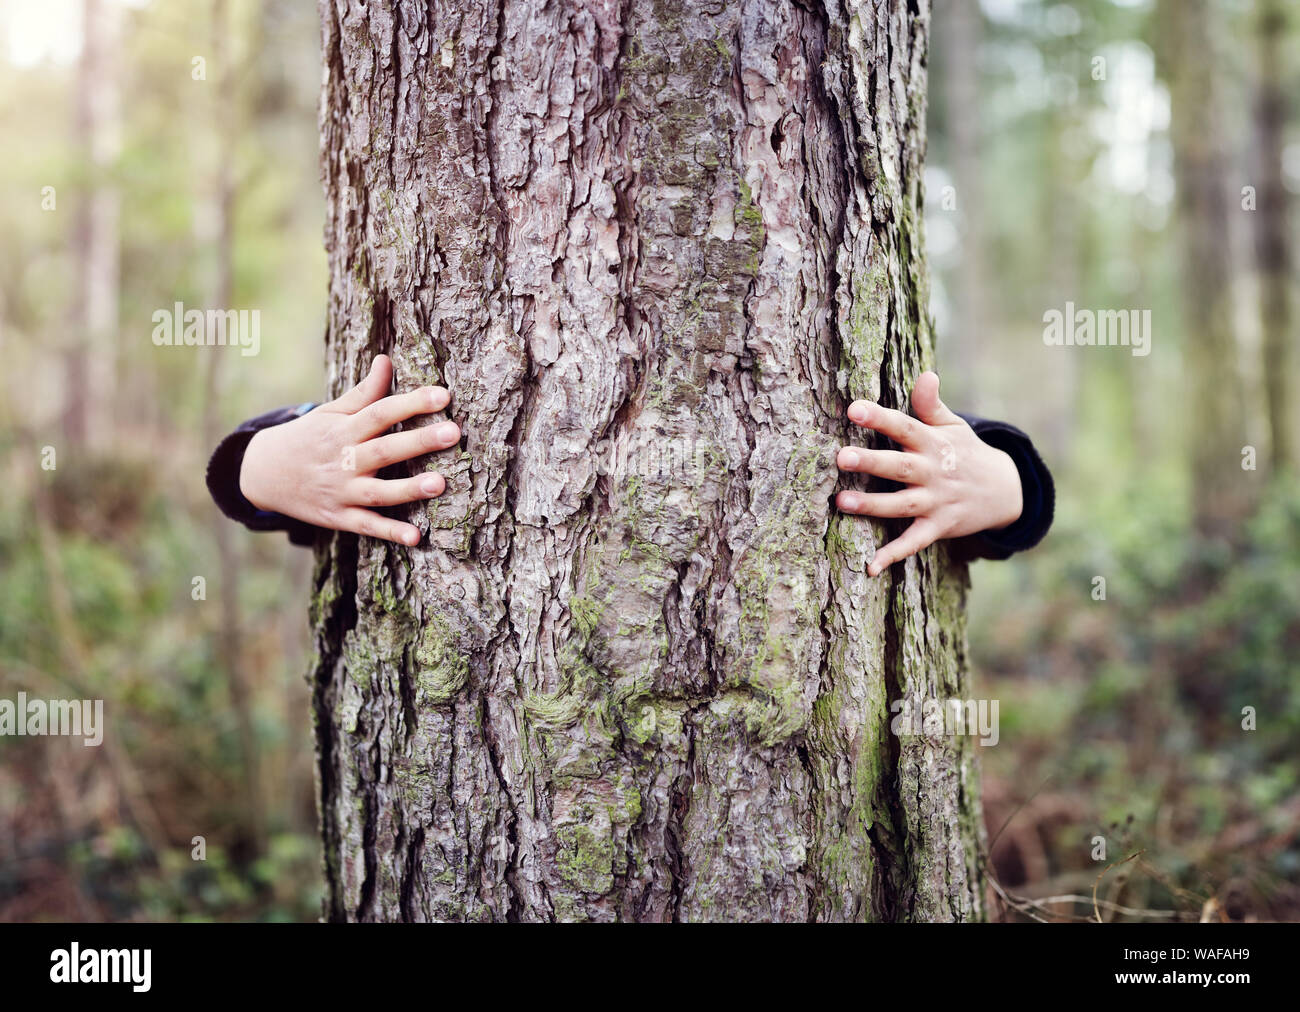 Abrazos, árbol chico dando un árbol un abrazo concepto para amar la naturaleza Foto de stock